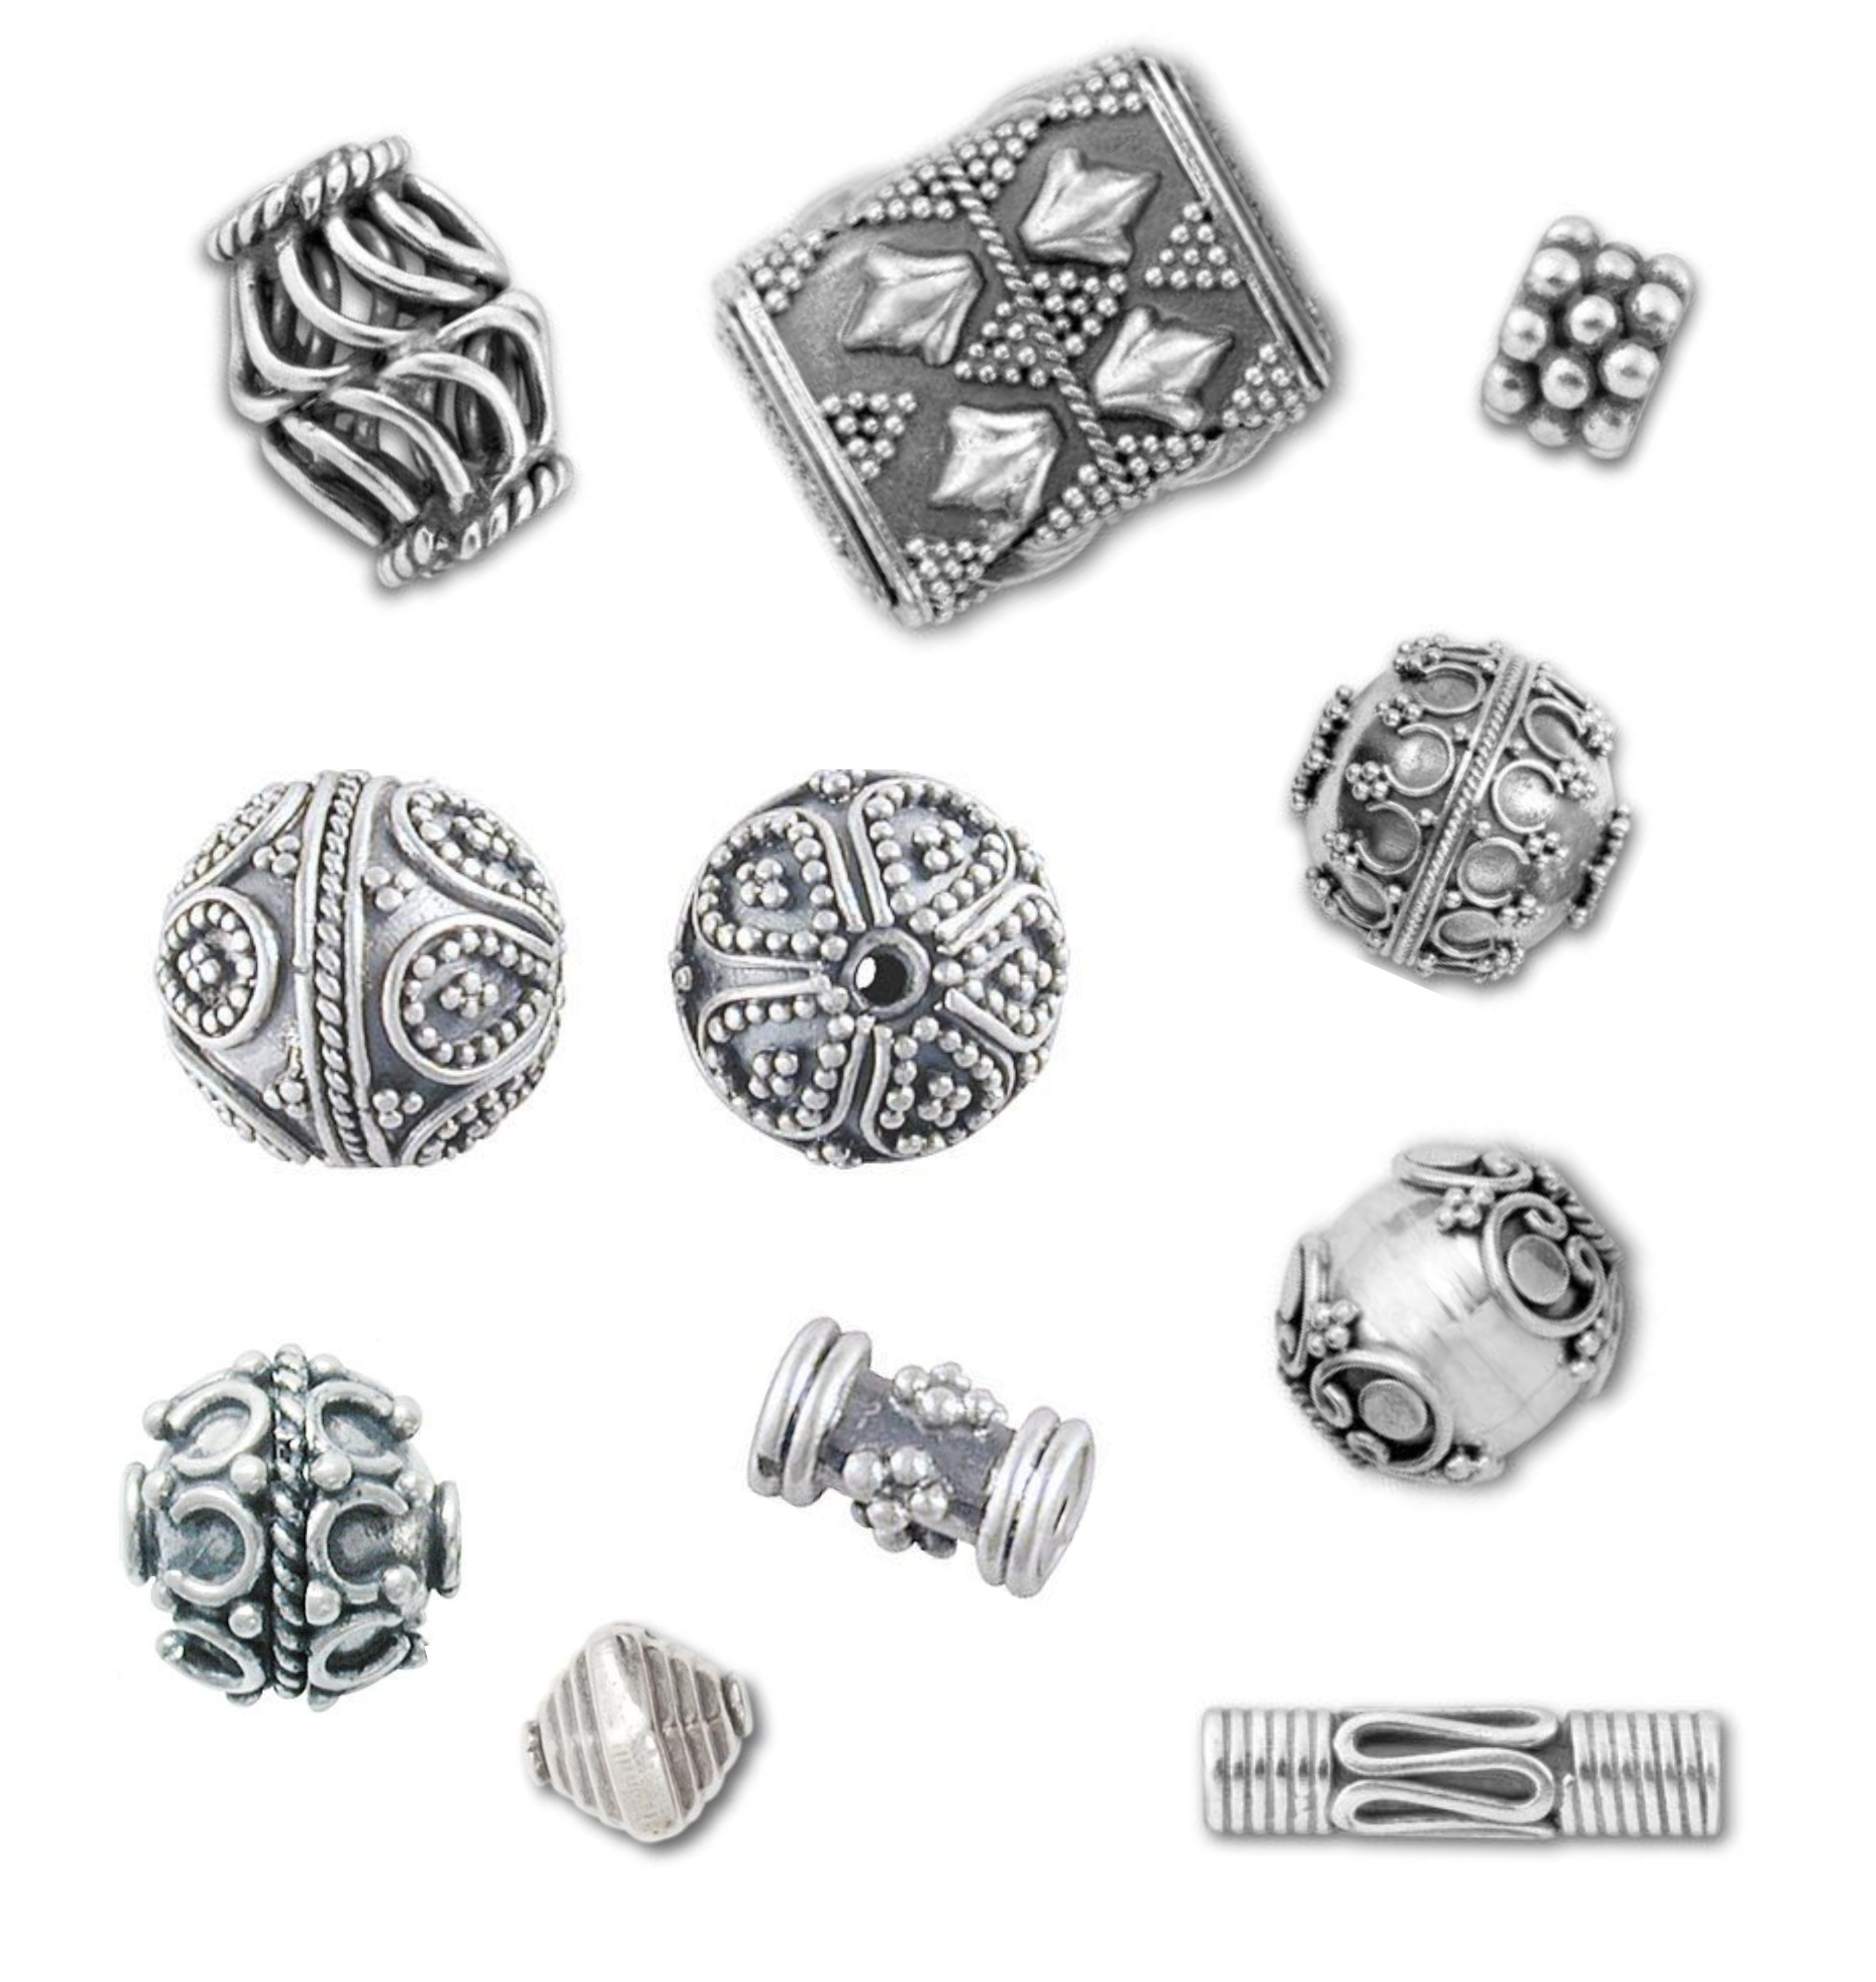 Bali silver beads